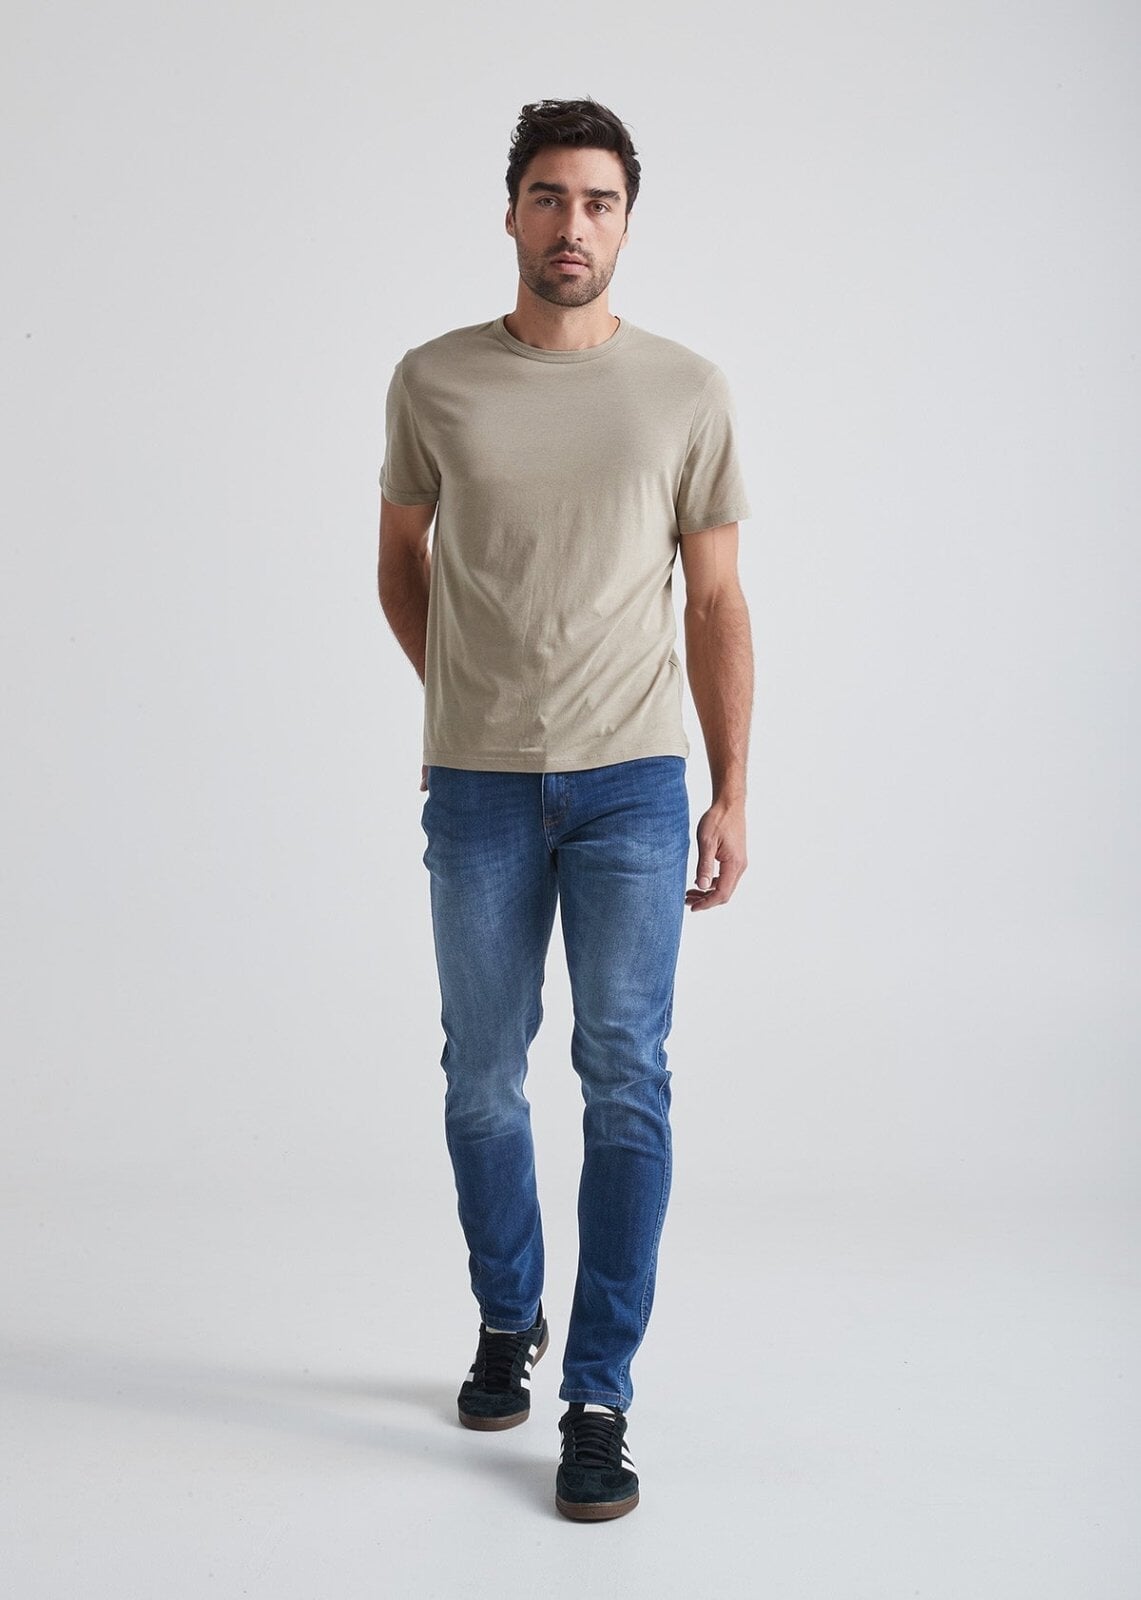 Dark Navy Blue Denim Ankle Length Stretchable Men's Jeans